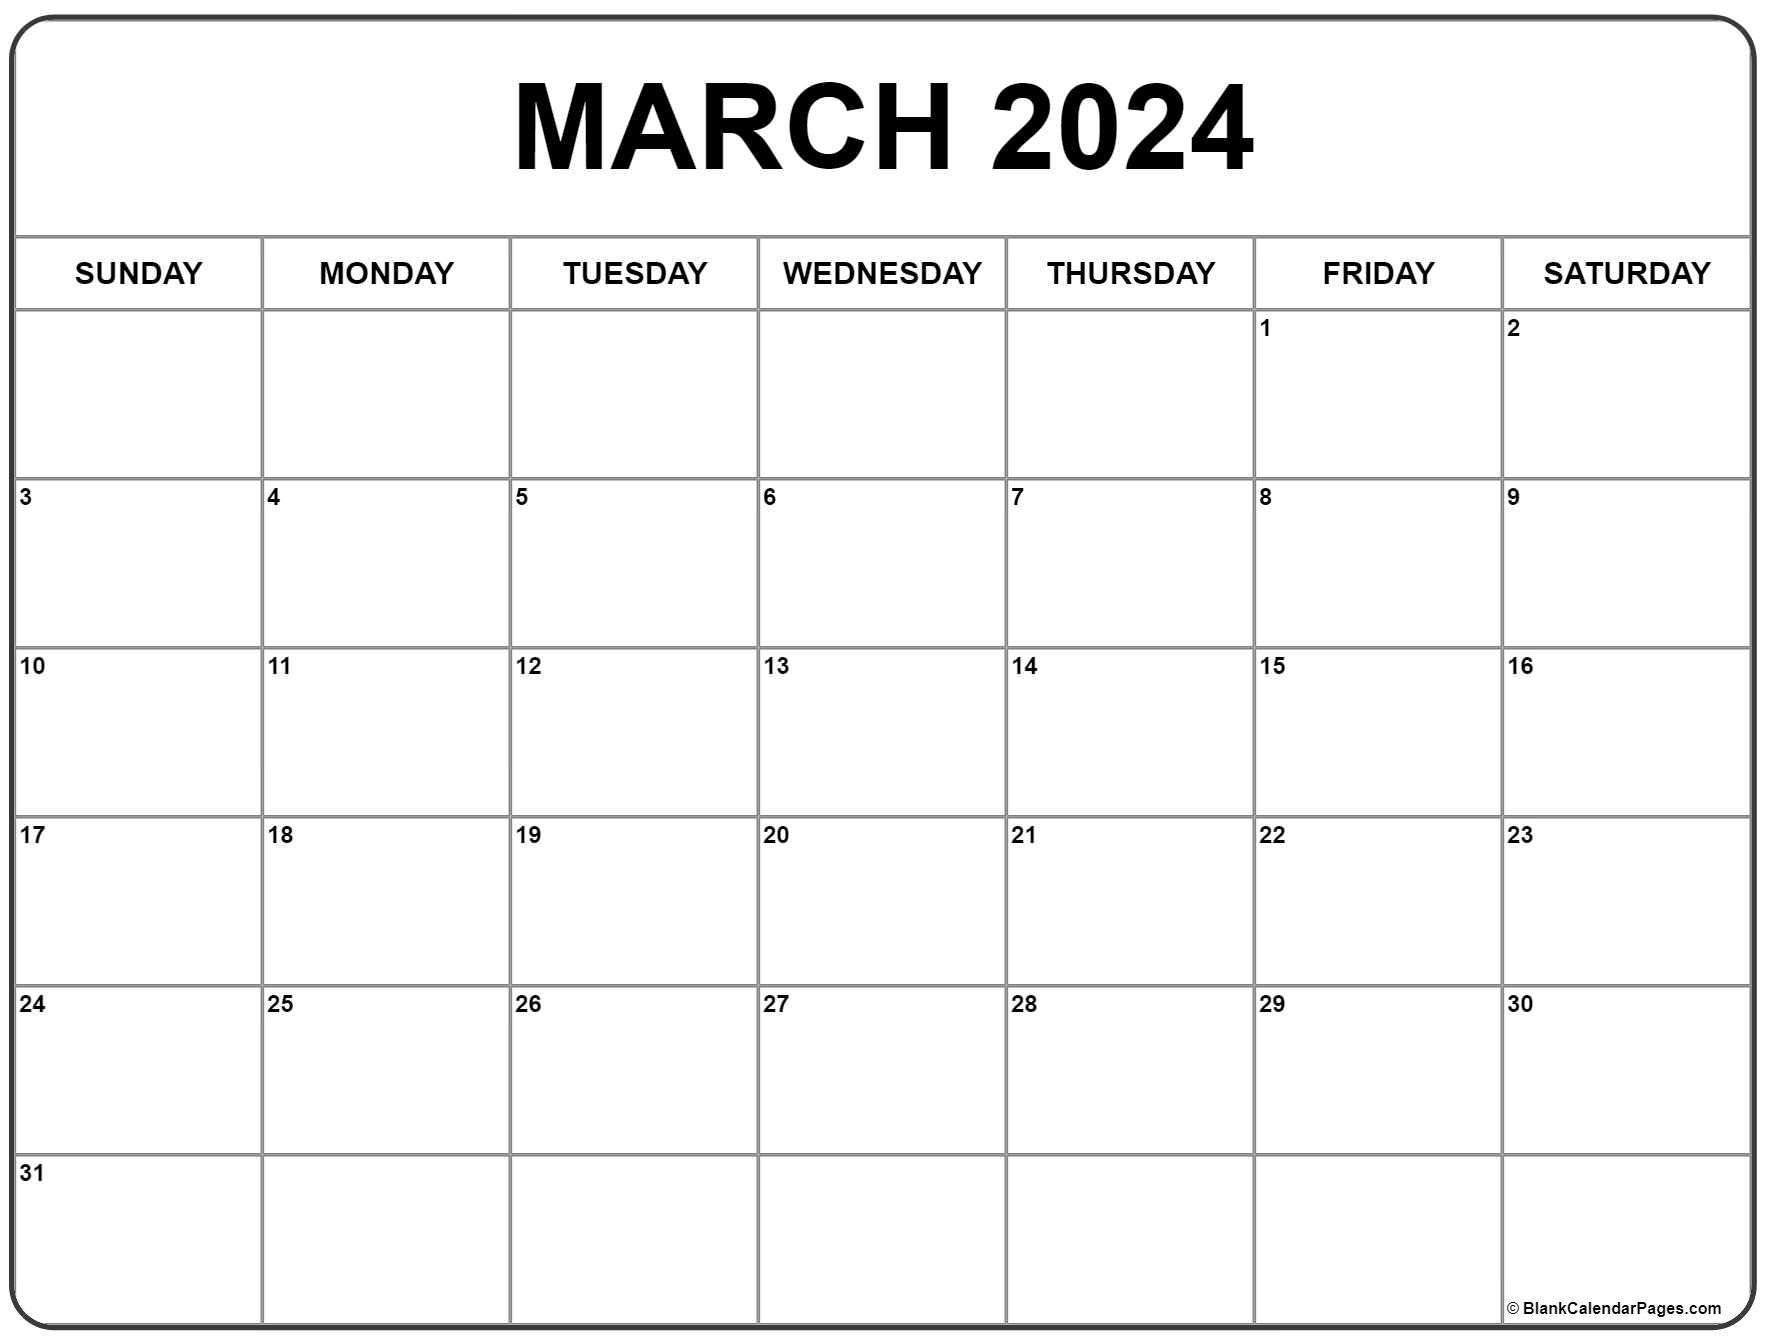 March 2022 Free Printable Calendar March 2022 Calendar | Free Printable Calendar Templates